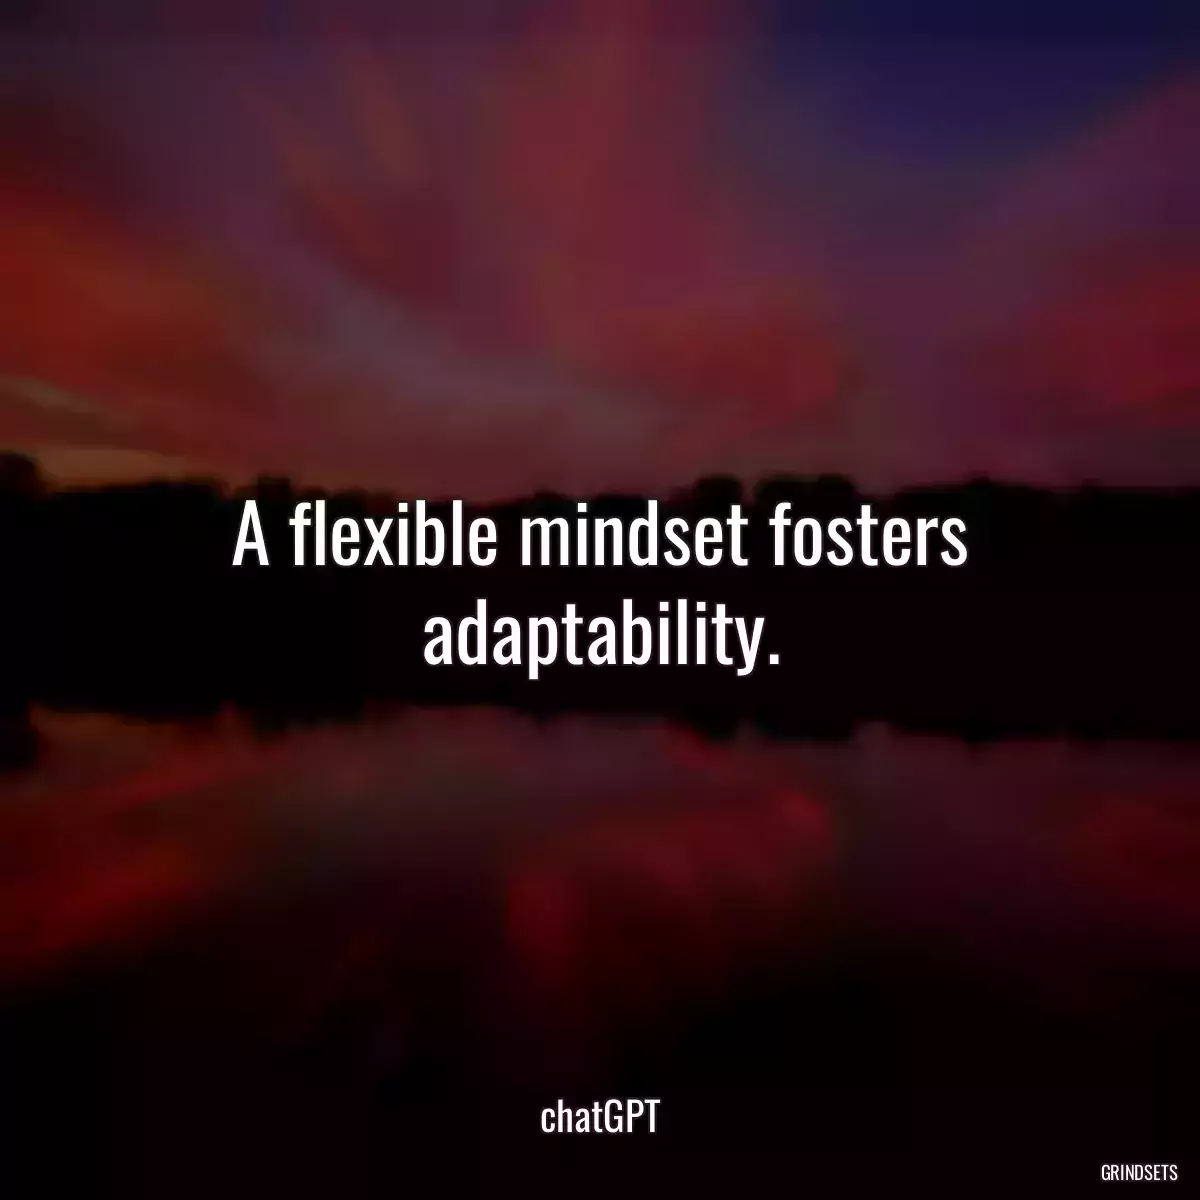 A flexible mindset fosters adaptability.